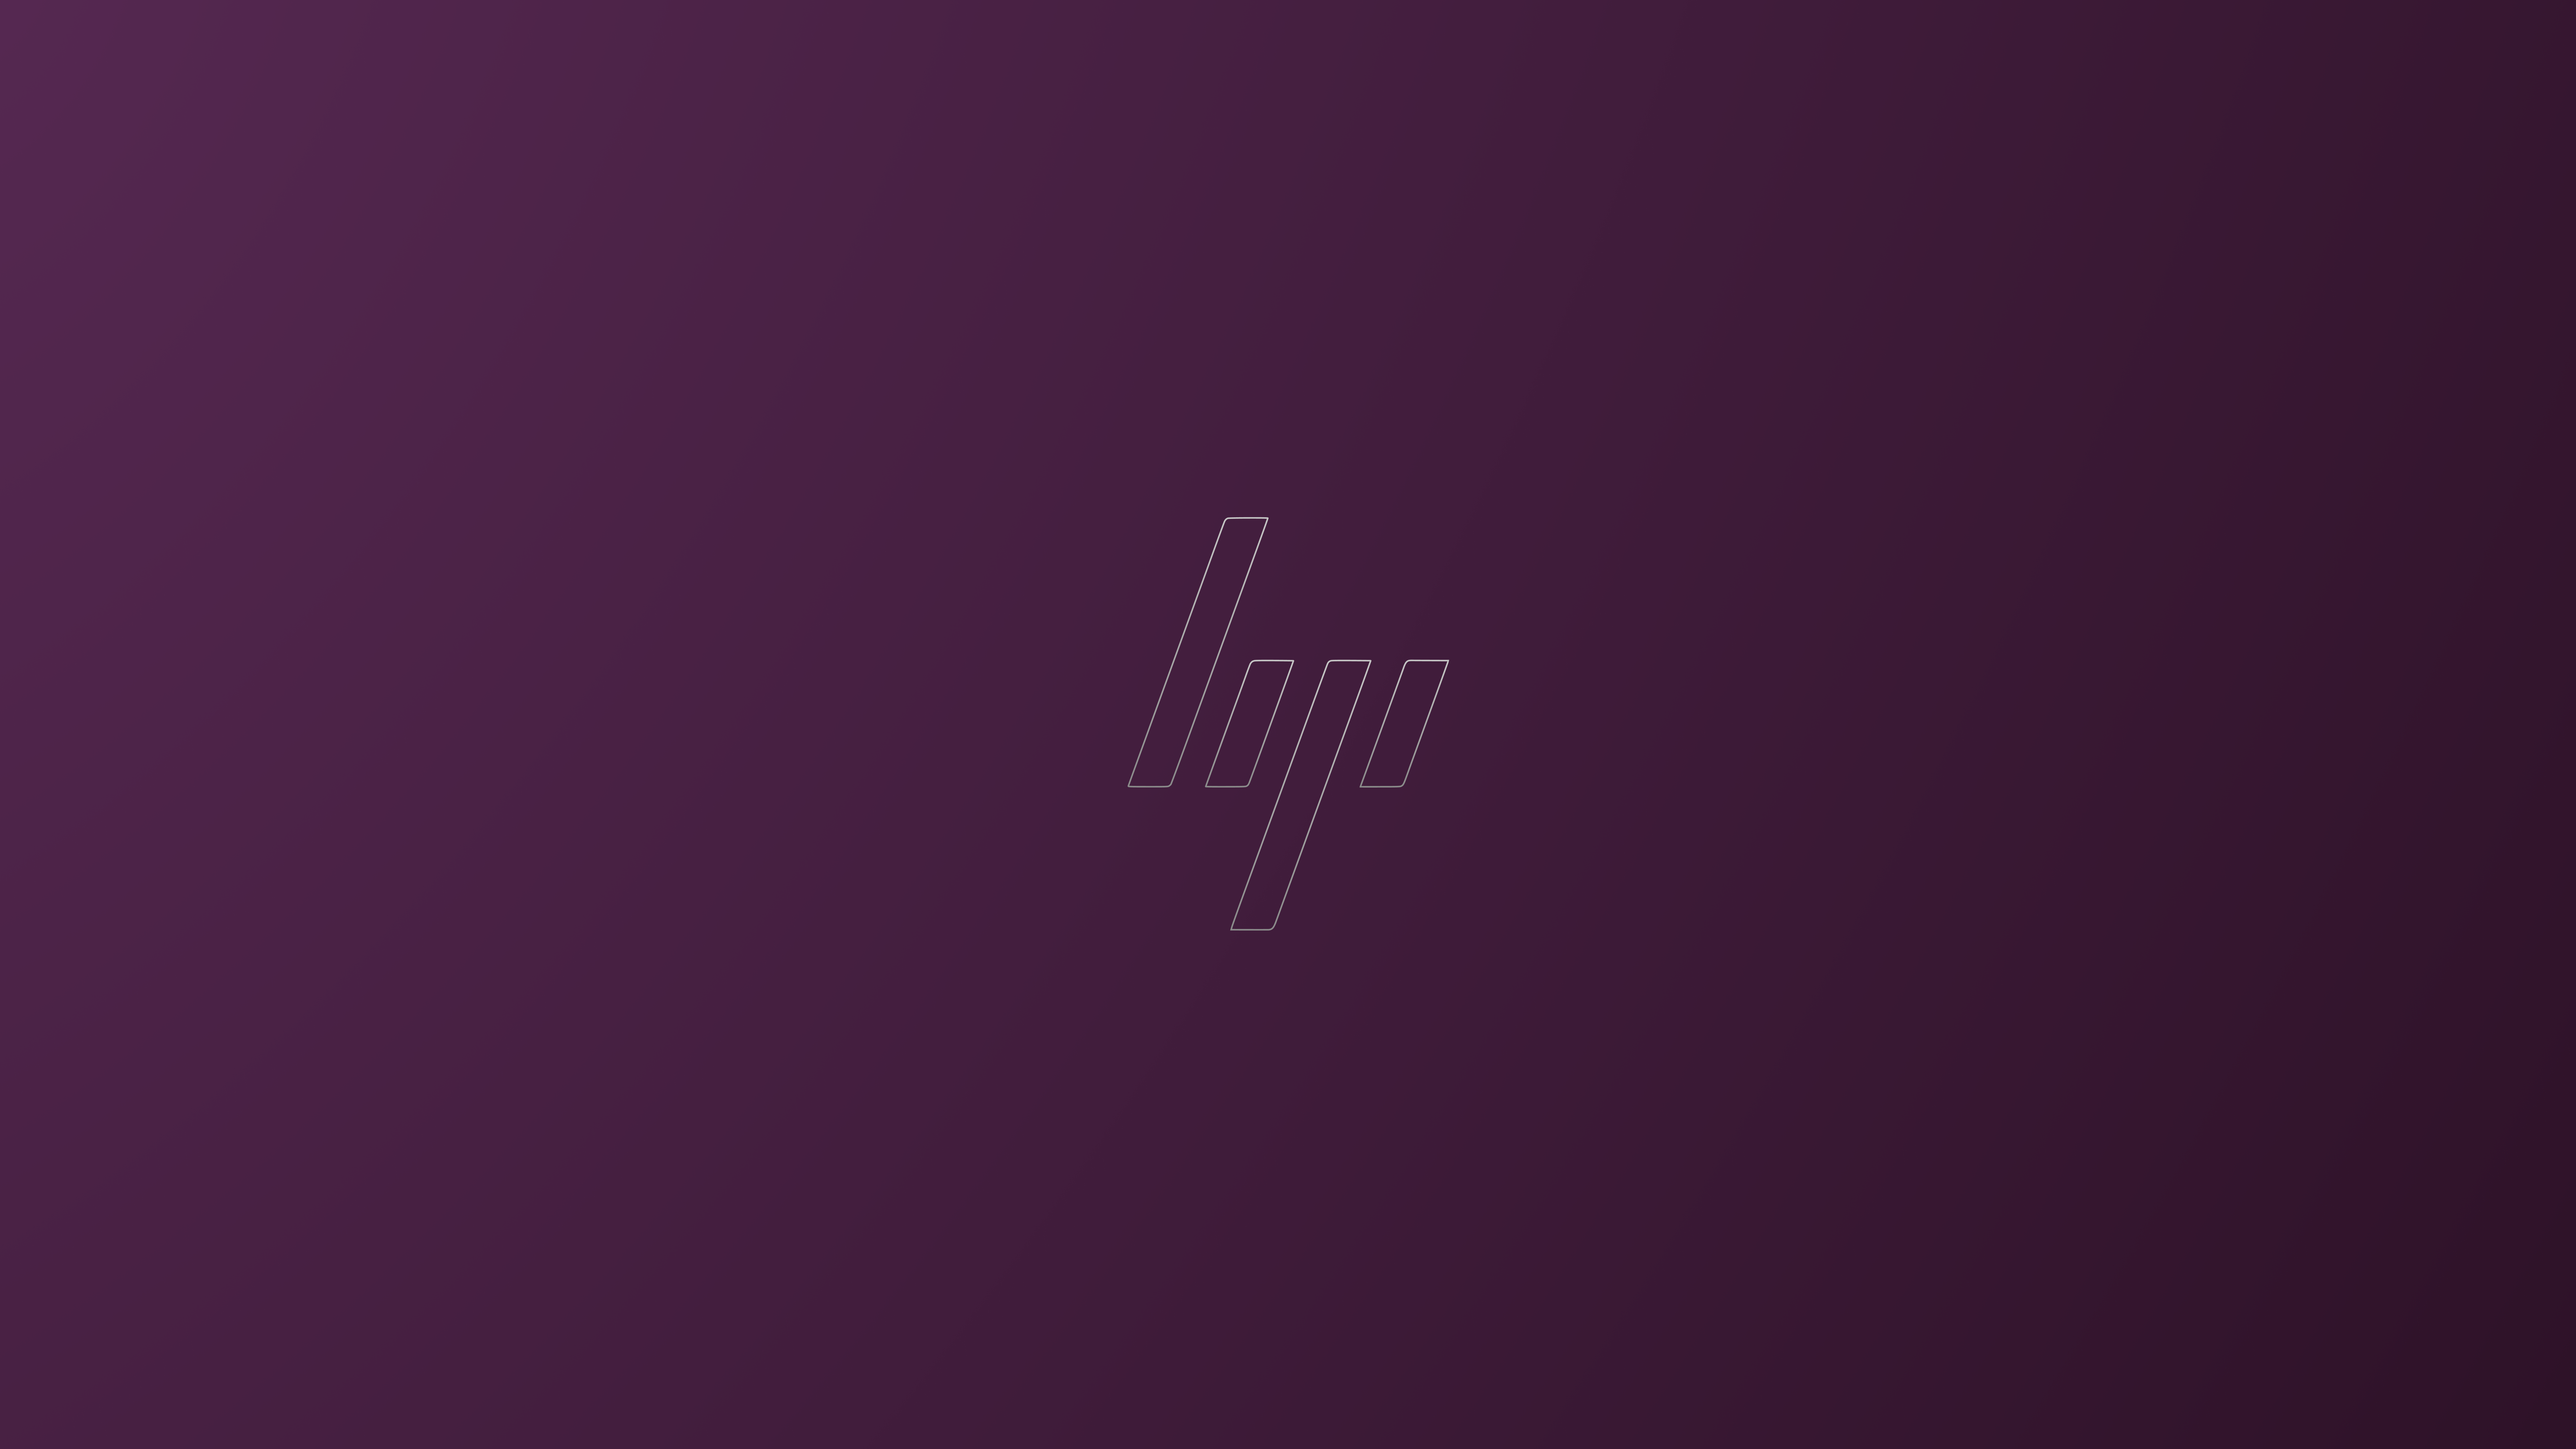 General 7680x4320 brand logo Hewlett Packard purple background minimalism digital art simple background